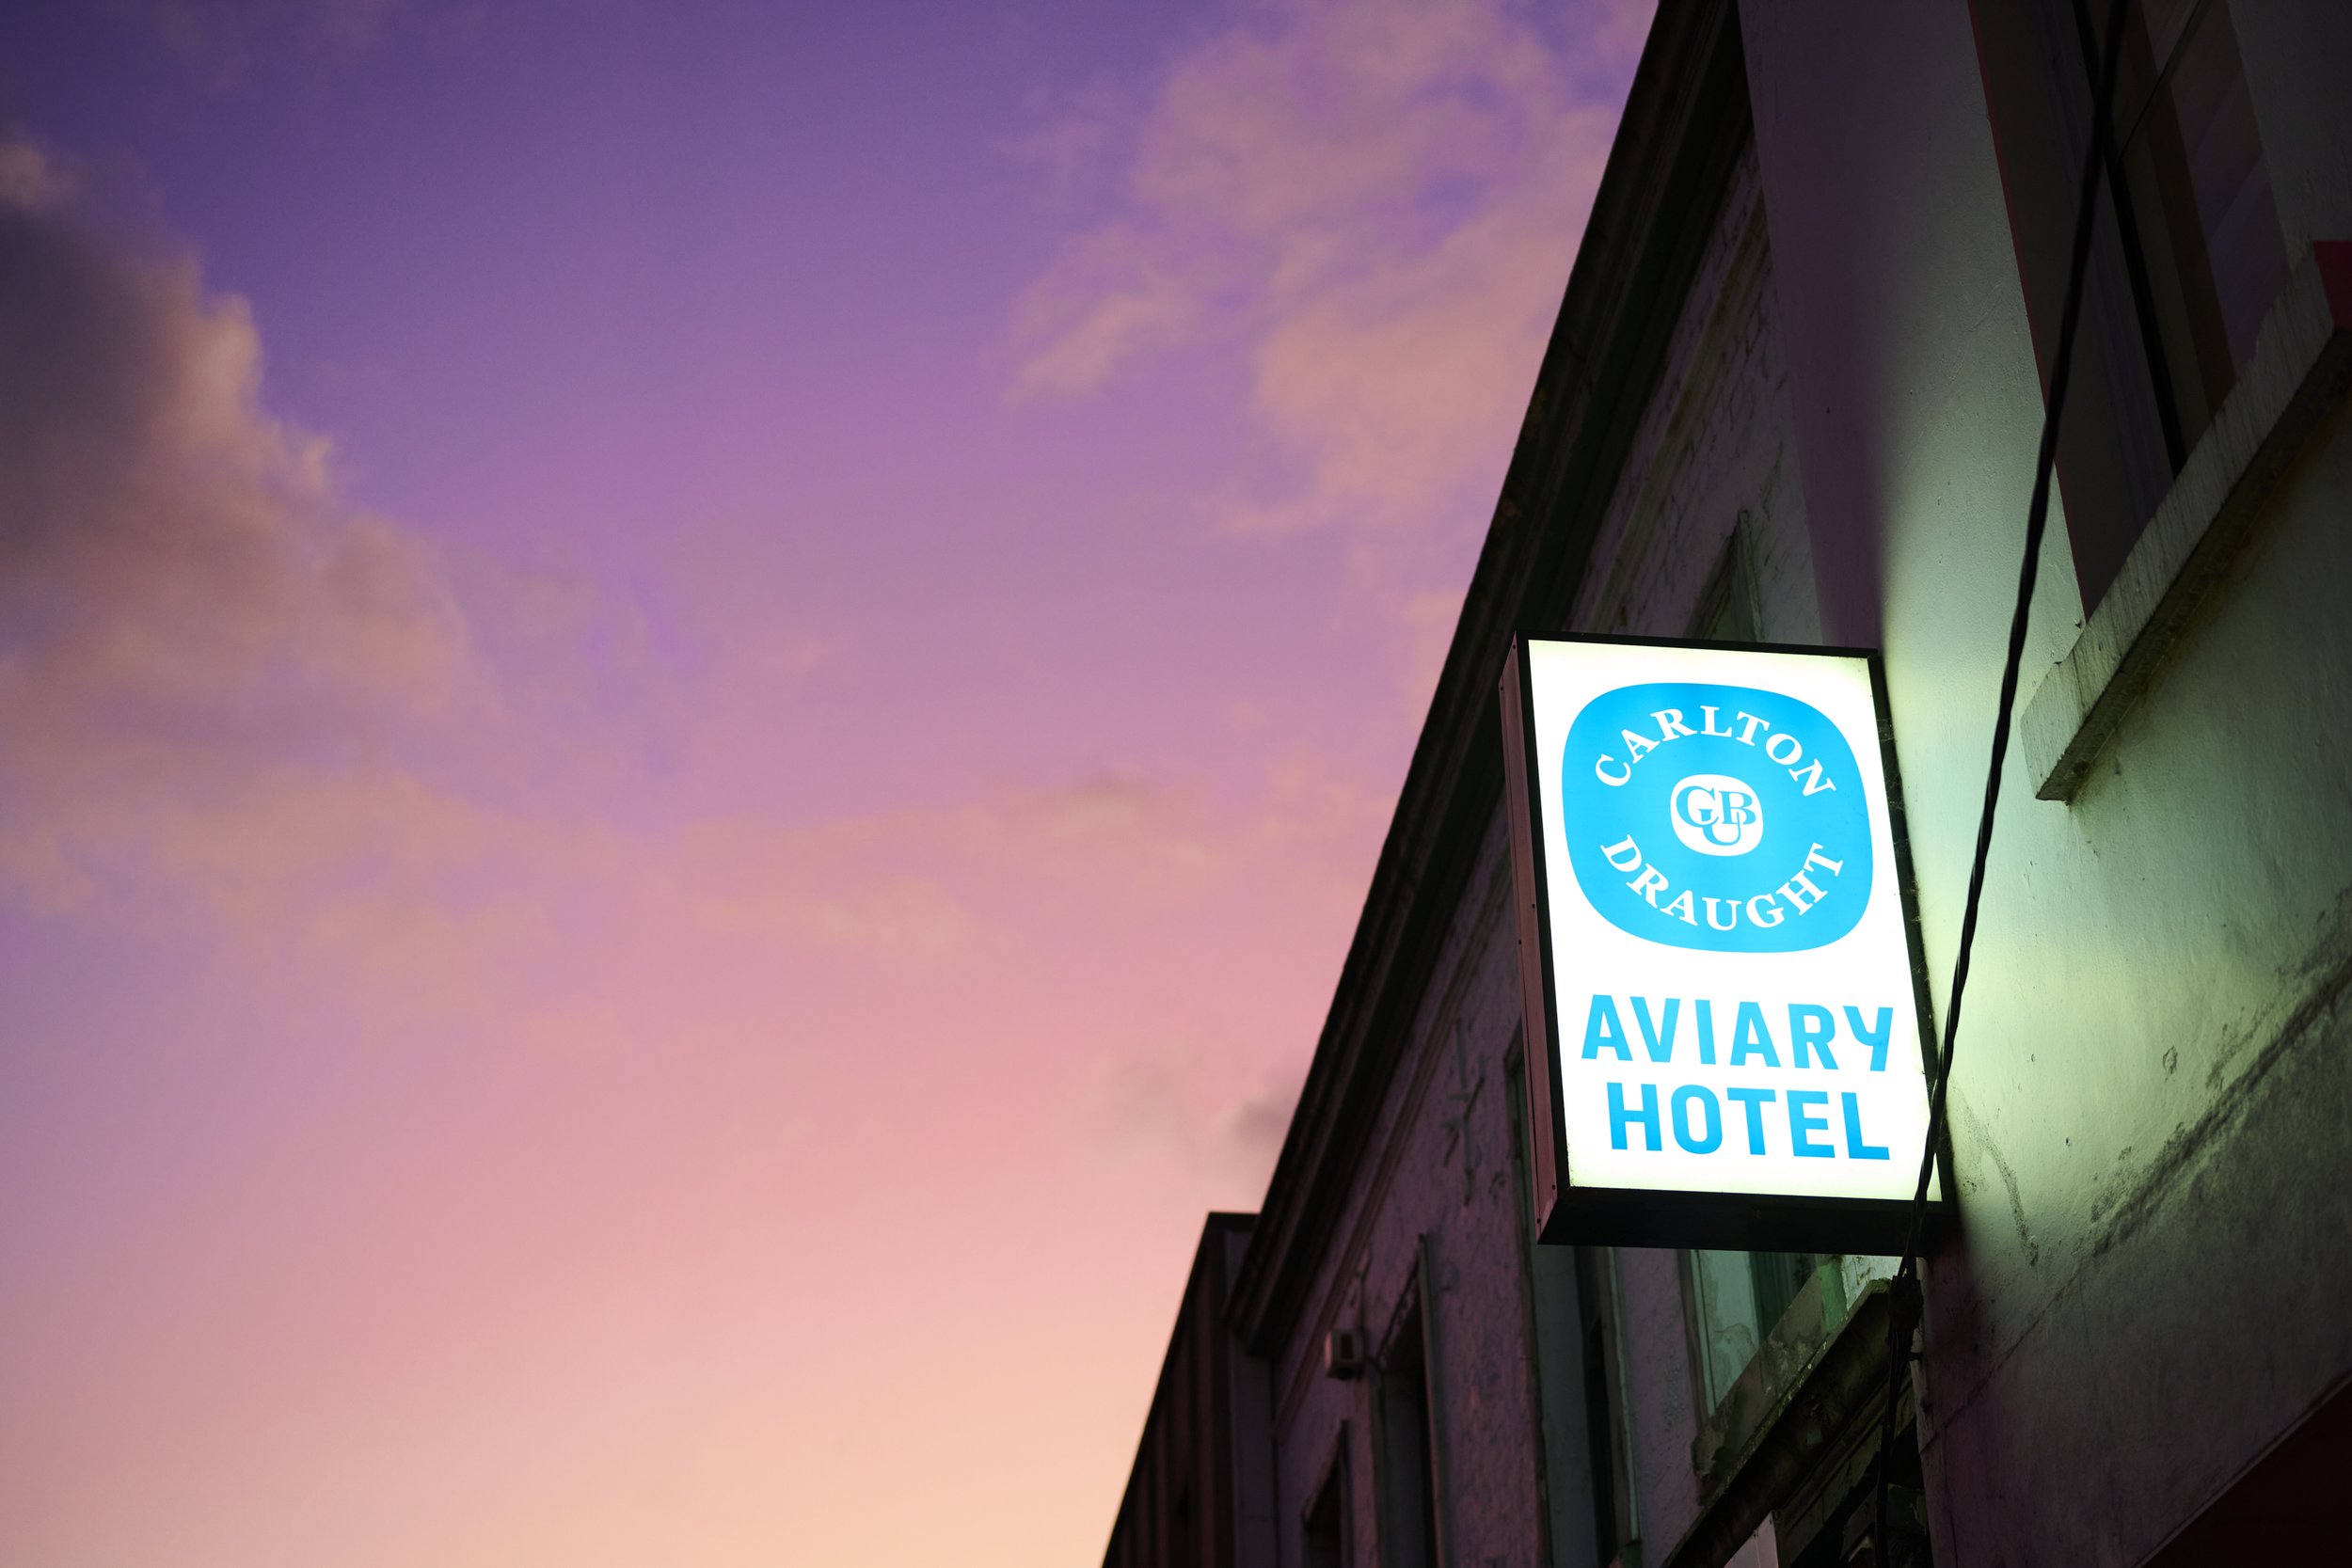 Aviary Hotel - Serv Agency - Longboy Media.jpg